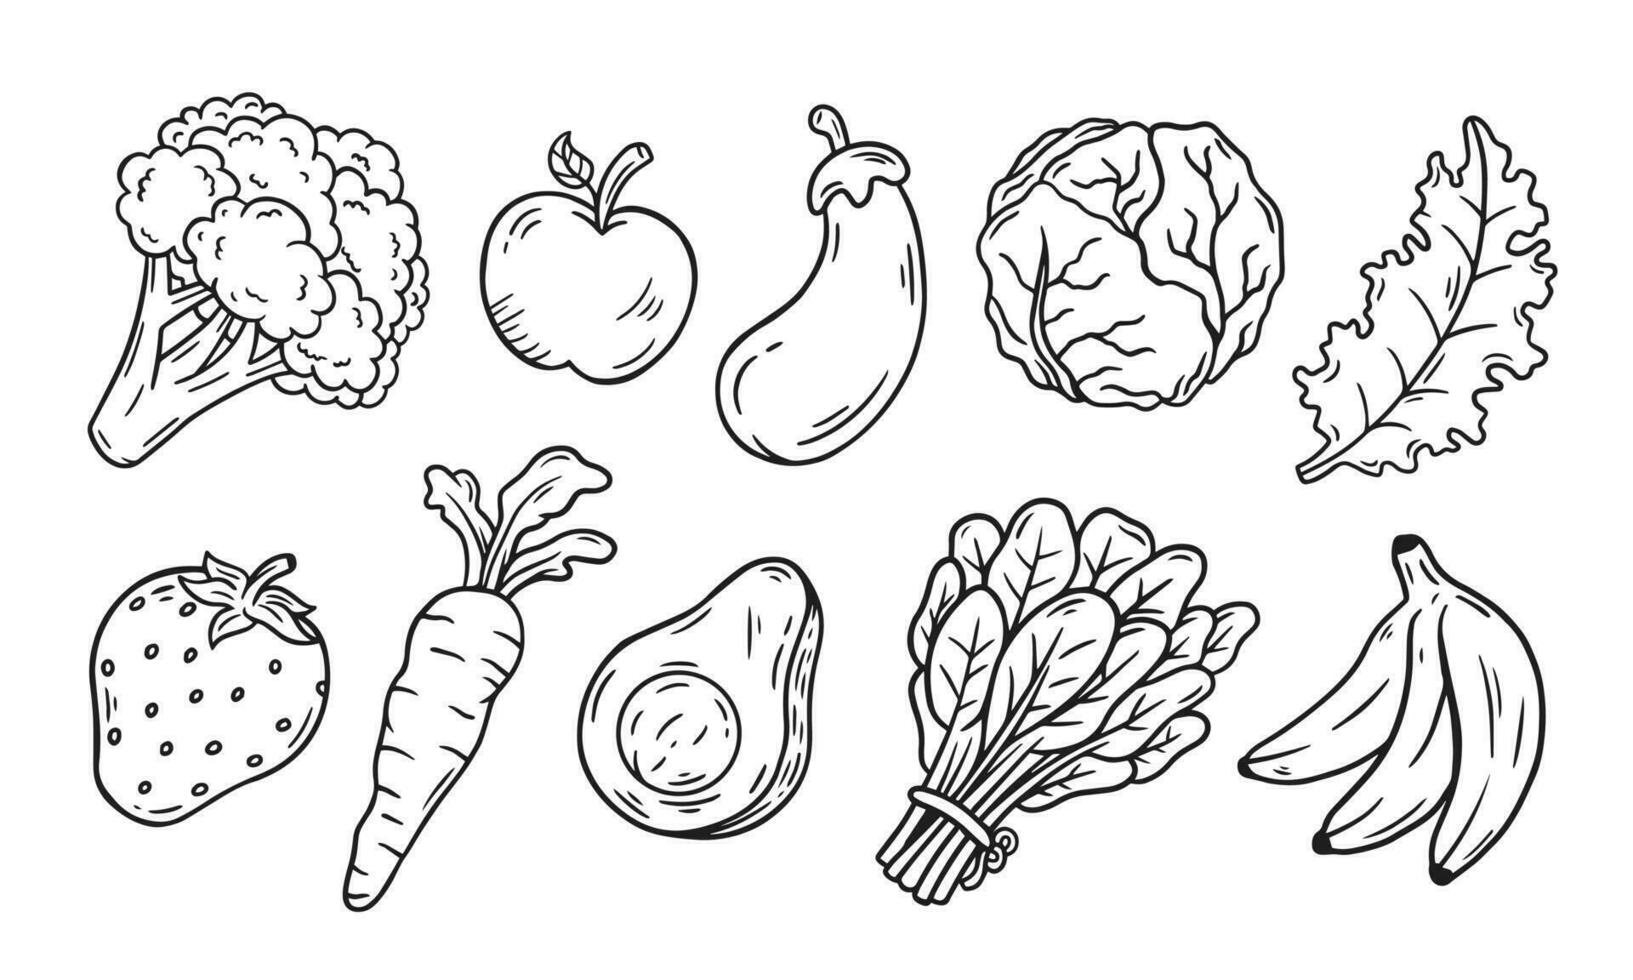 Vegetable and Fruit doodle line set. Freehand doodle hand drawn sketch style drawing fruit and vegetables. Vector illustration